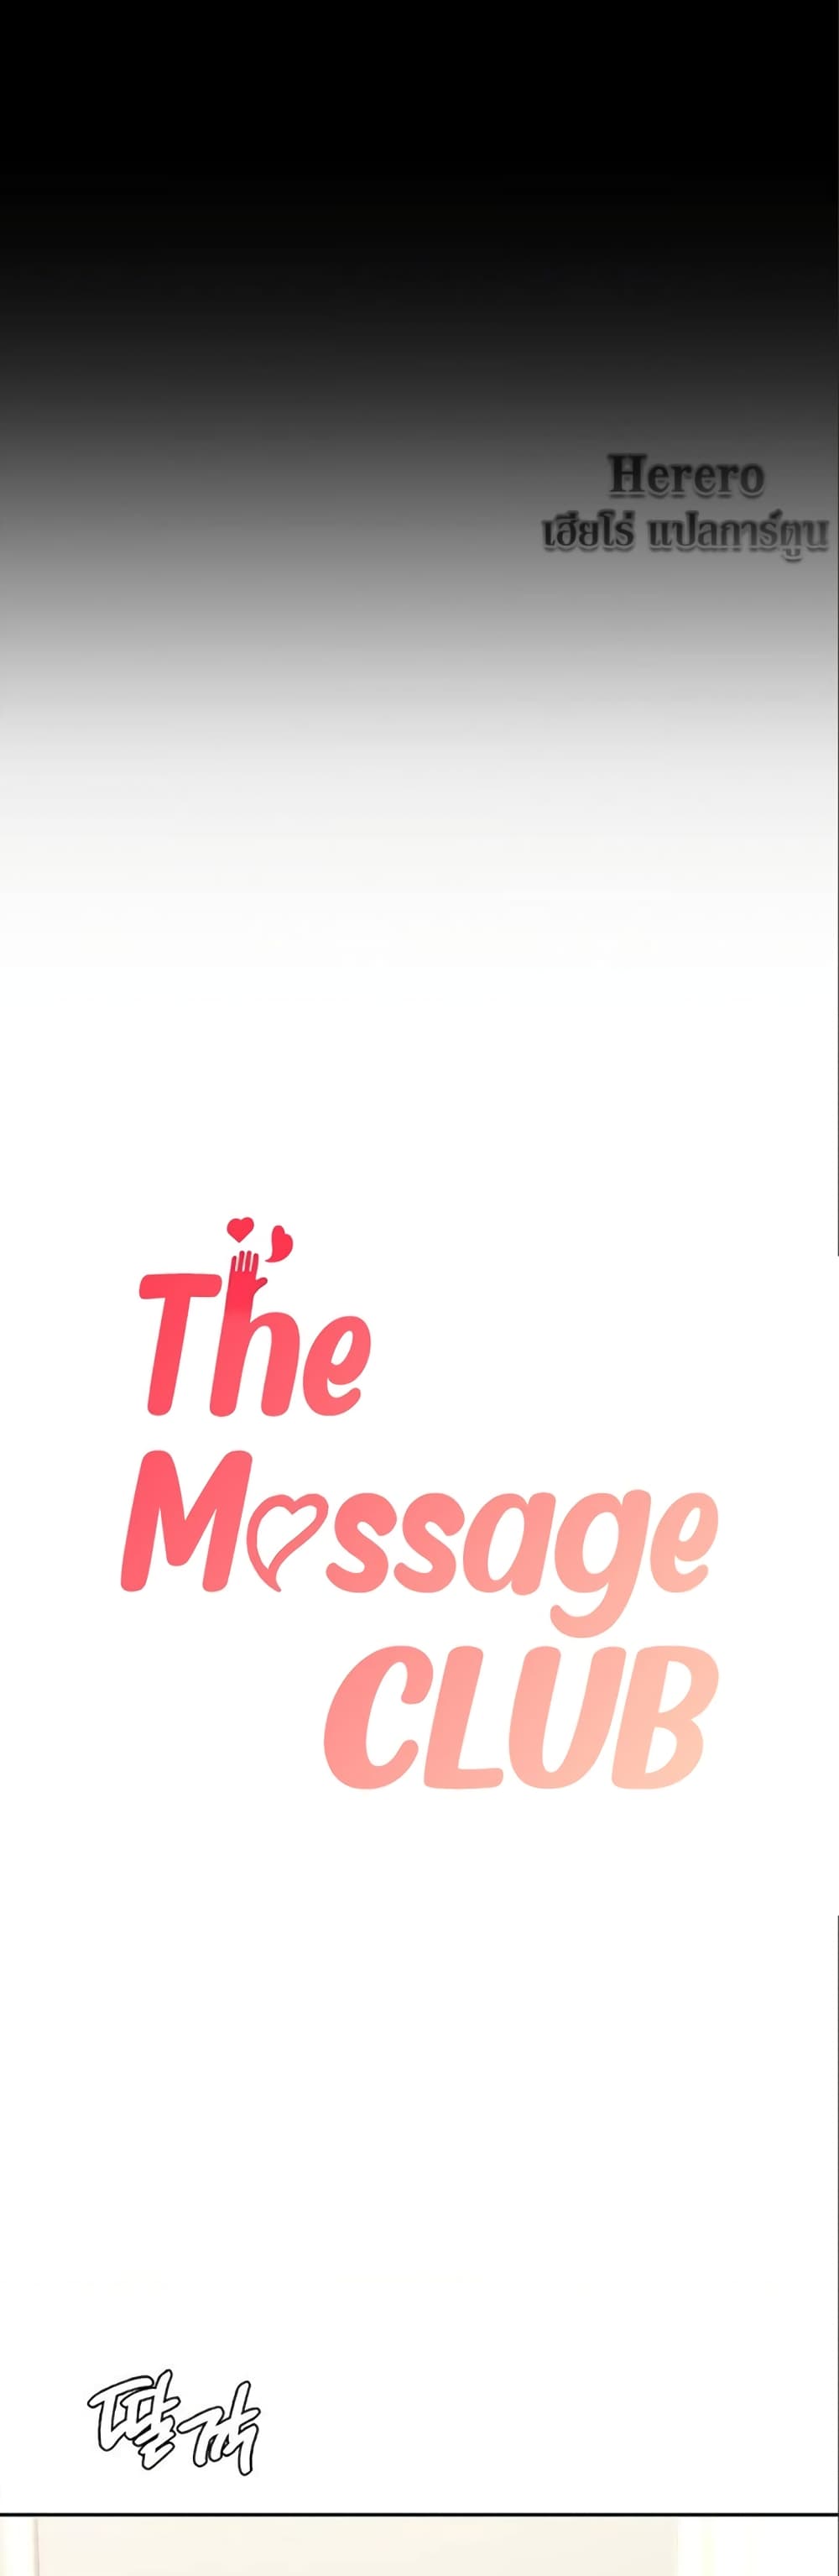 The Massage Club 1-1